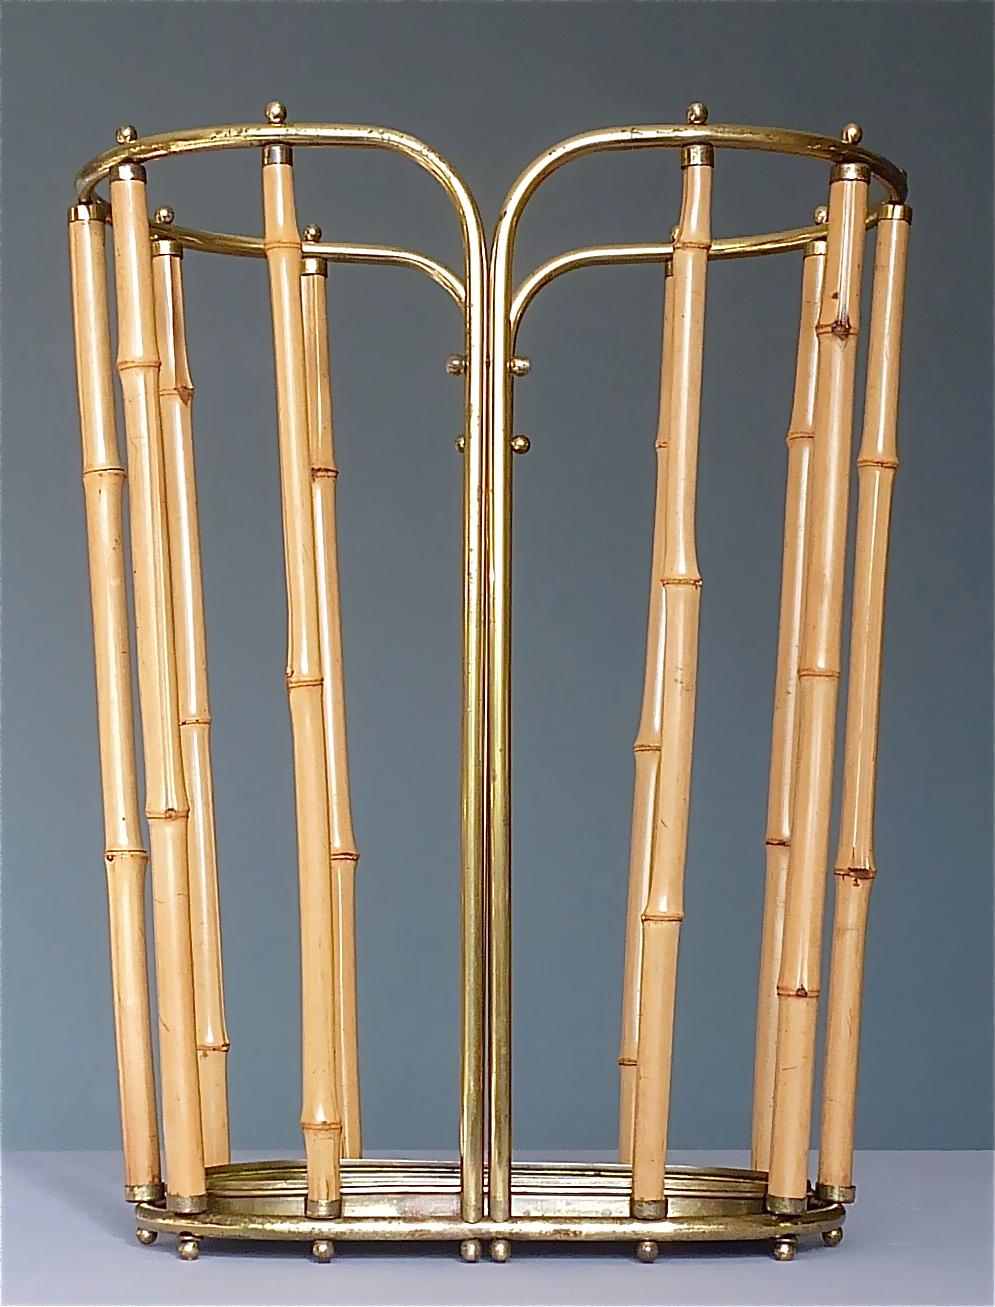 1950s Austrian Modernist Umbrella Stand Brass Bamboo, Josef Frank, Auböck Style For Sale 5